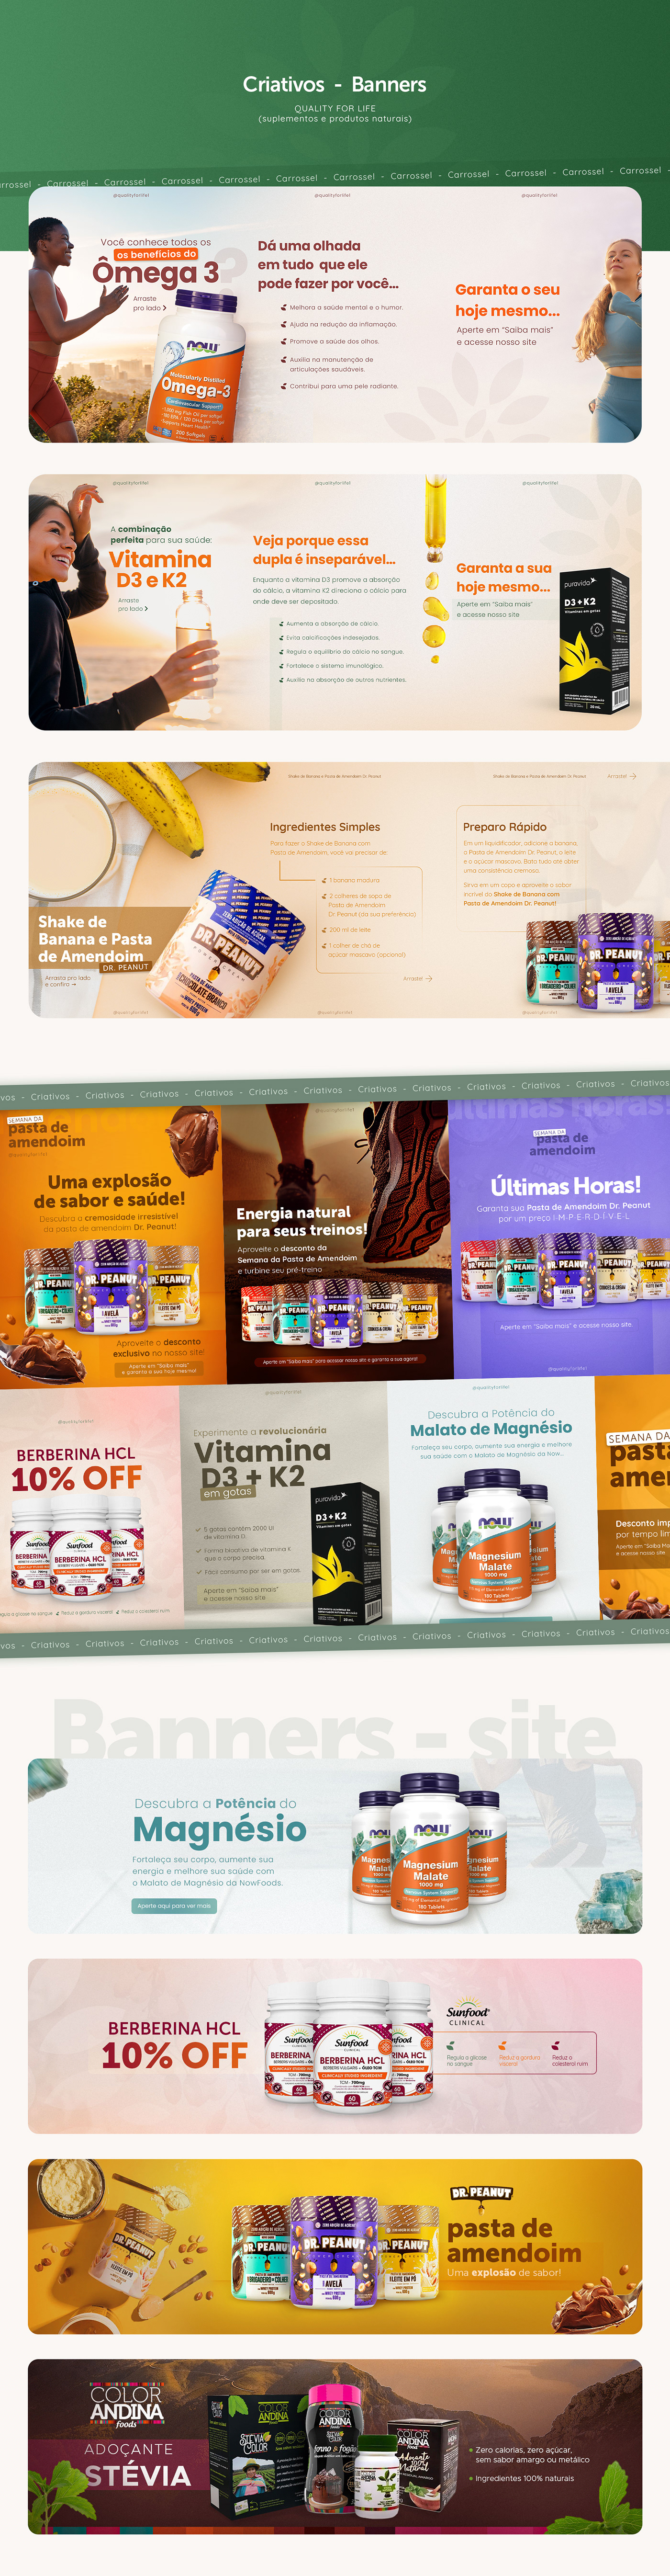 supplements suplementos produtos naturais criativos anúncio Anúncios